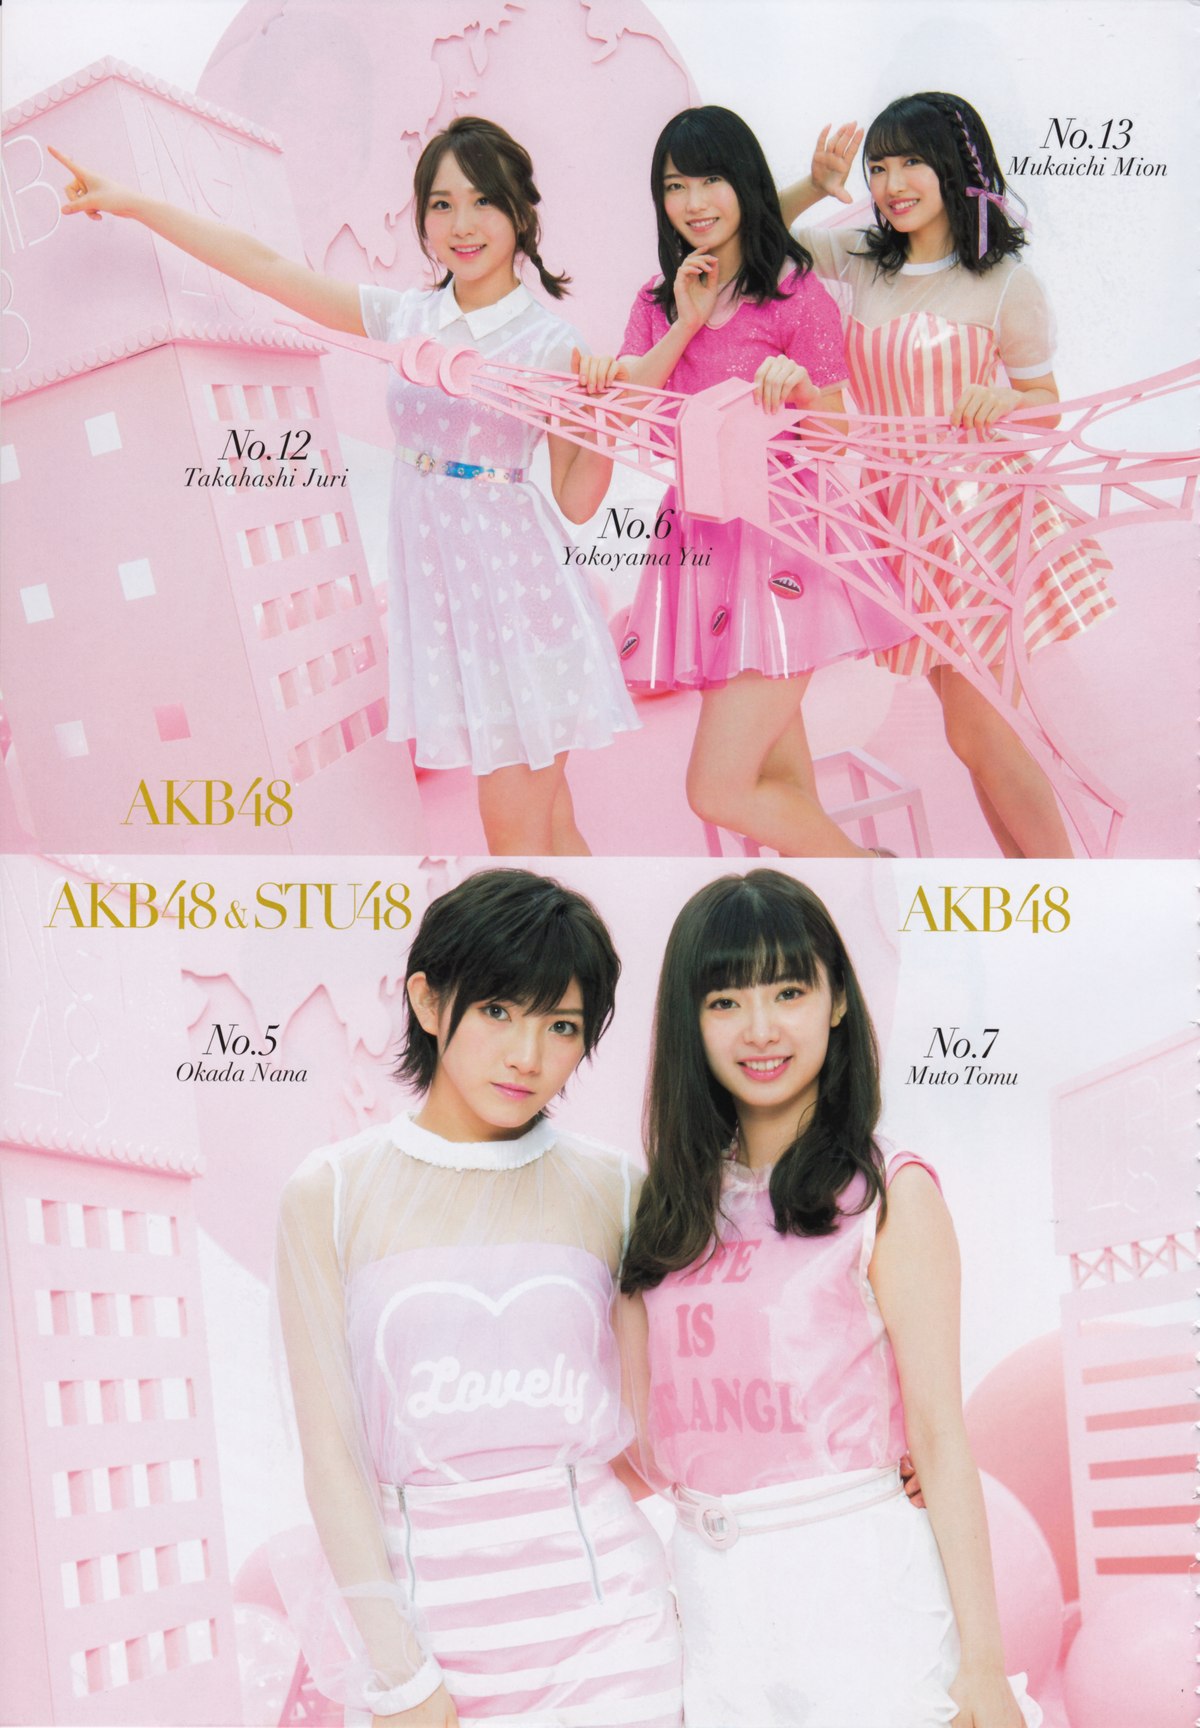 2018 10 17 AKB48 Special Mook AKB48 General Election Plainclothes Surprise Announcement 2018 B 0041 7879399291.jpg